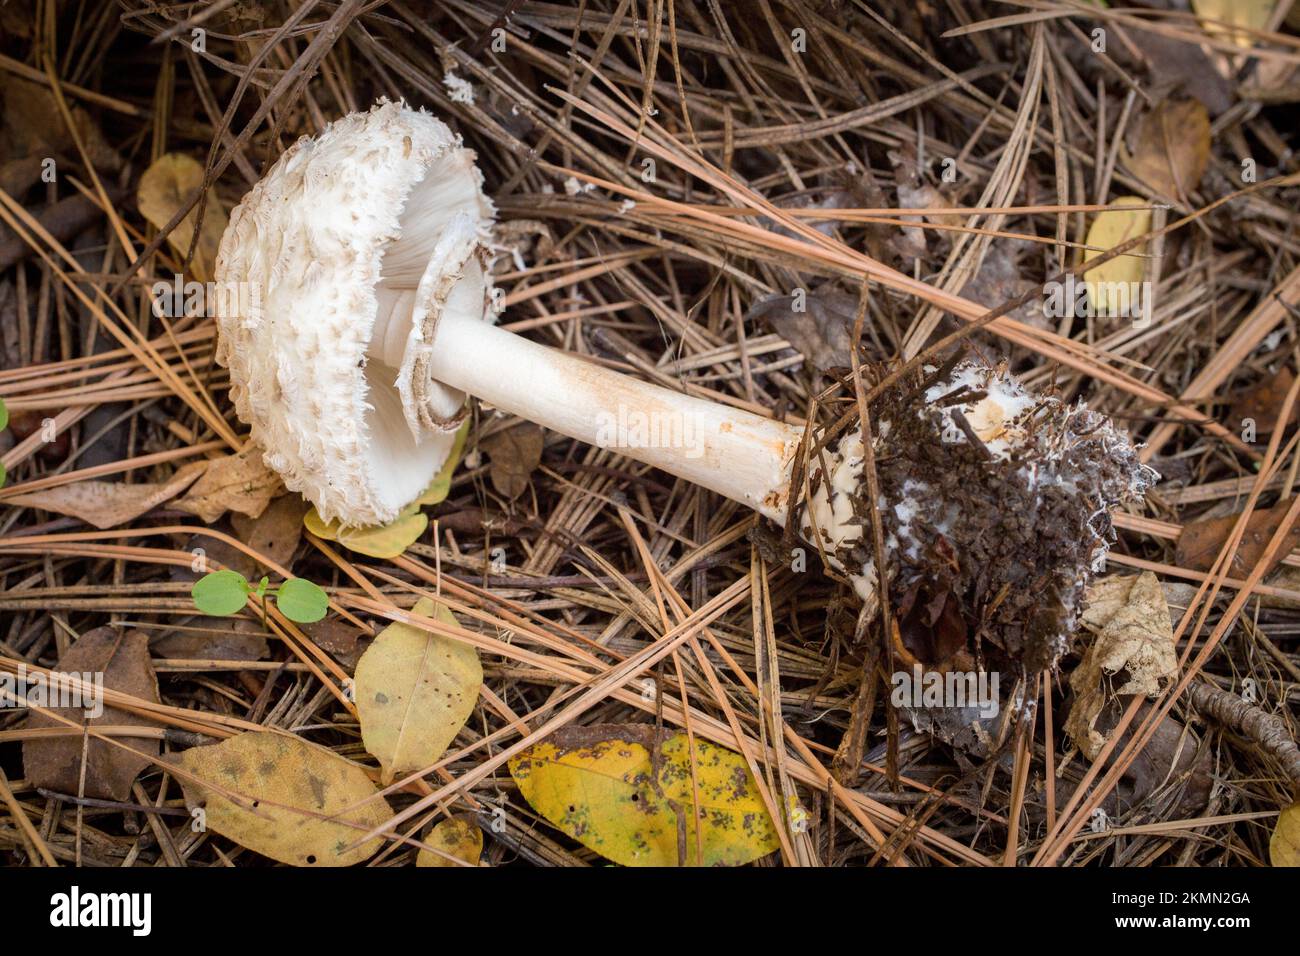 A shaggy parasol mushroom, Chlorophyllum rhacodes, showing the veil, stem, stem base, and mycelium. This mushroom was found growing under an ironwood Stock Photo